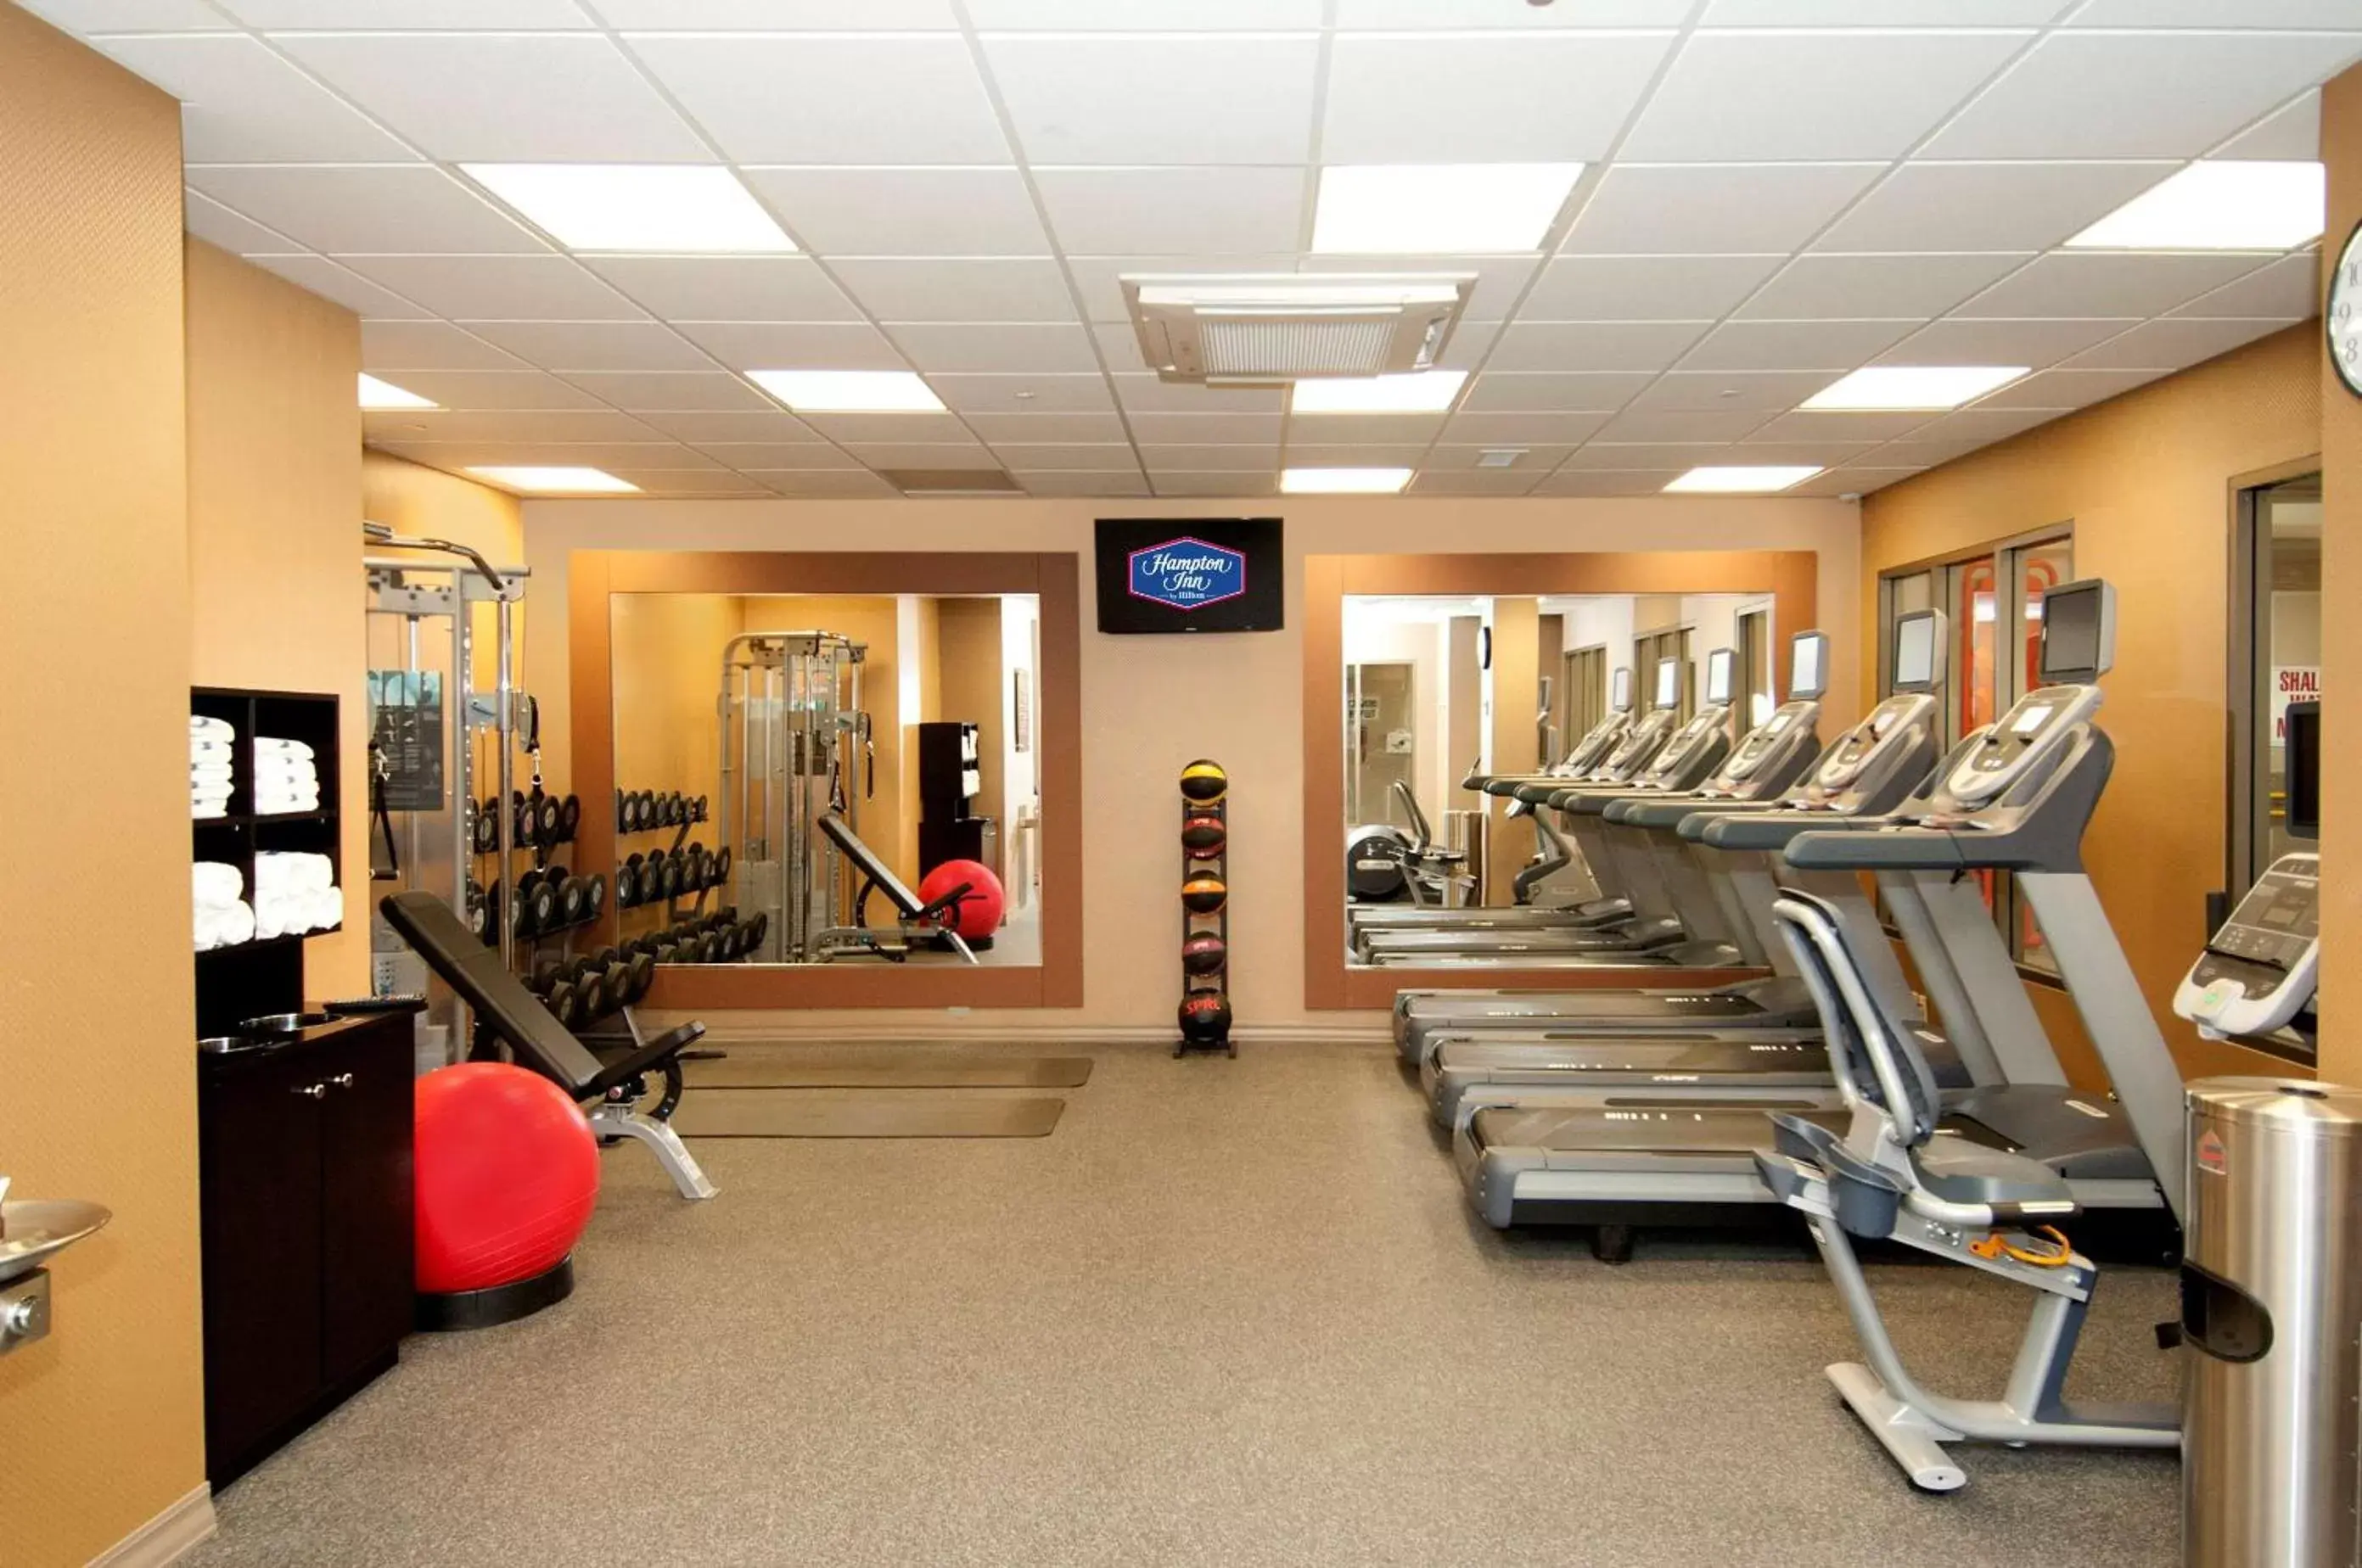 Fitness centre/facilities, Fitness Center/Facilities in Hampton Inn by Hilton Brampton - Toronto